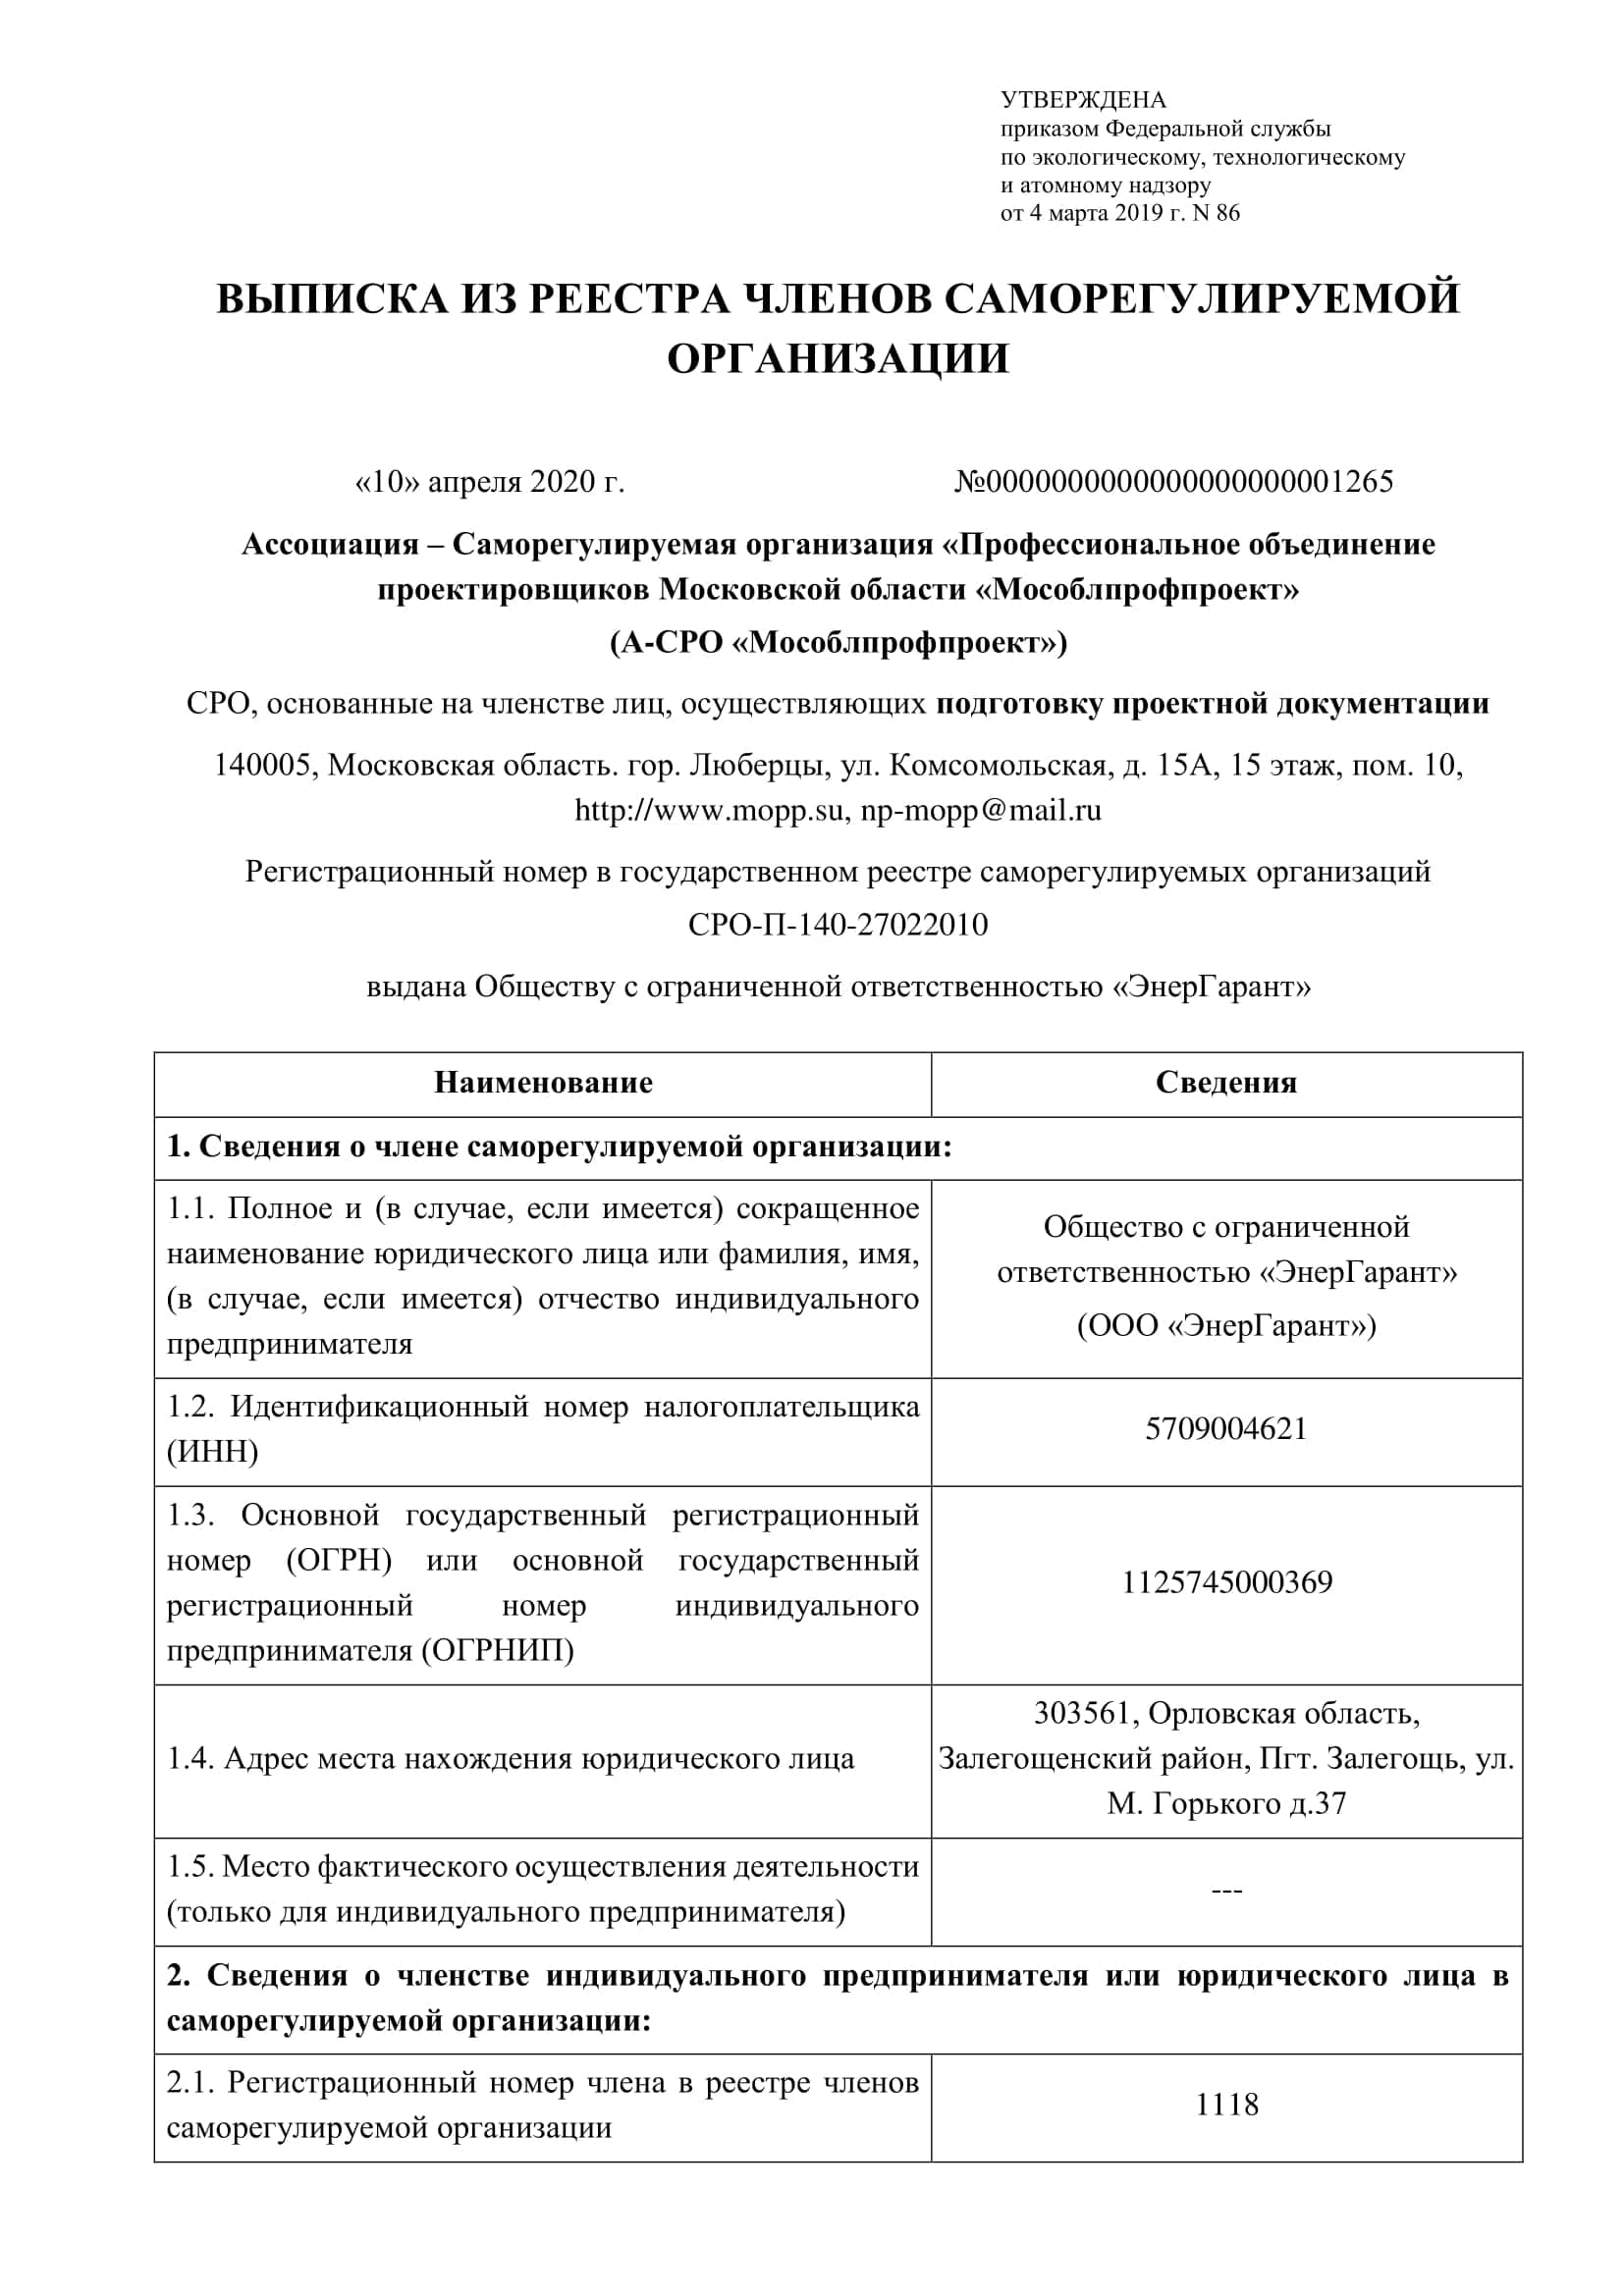 Выписка из А-СРО от 10.04.2020 г.